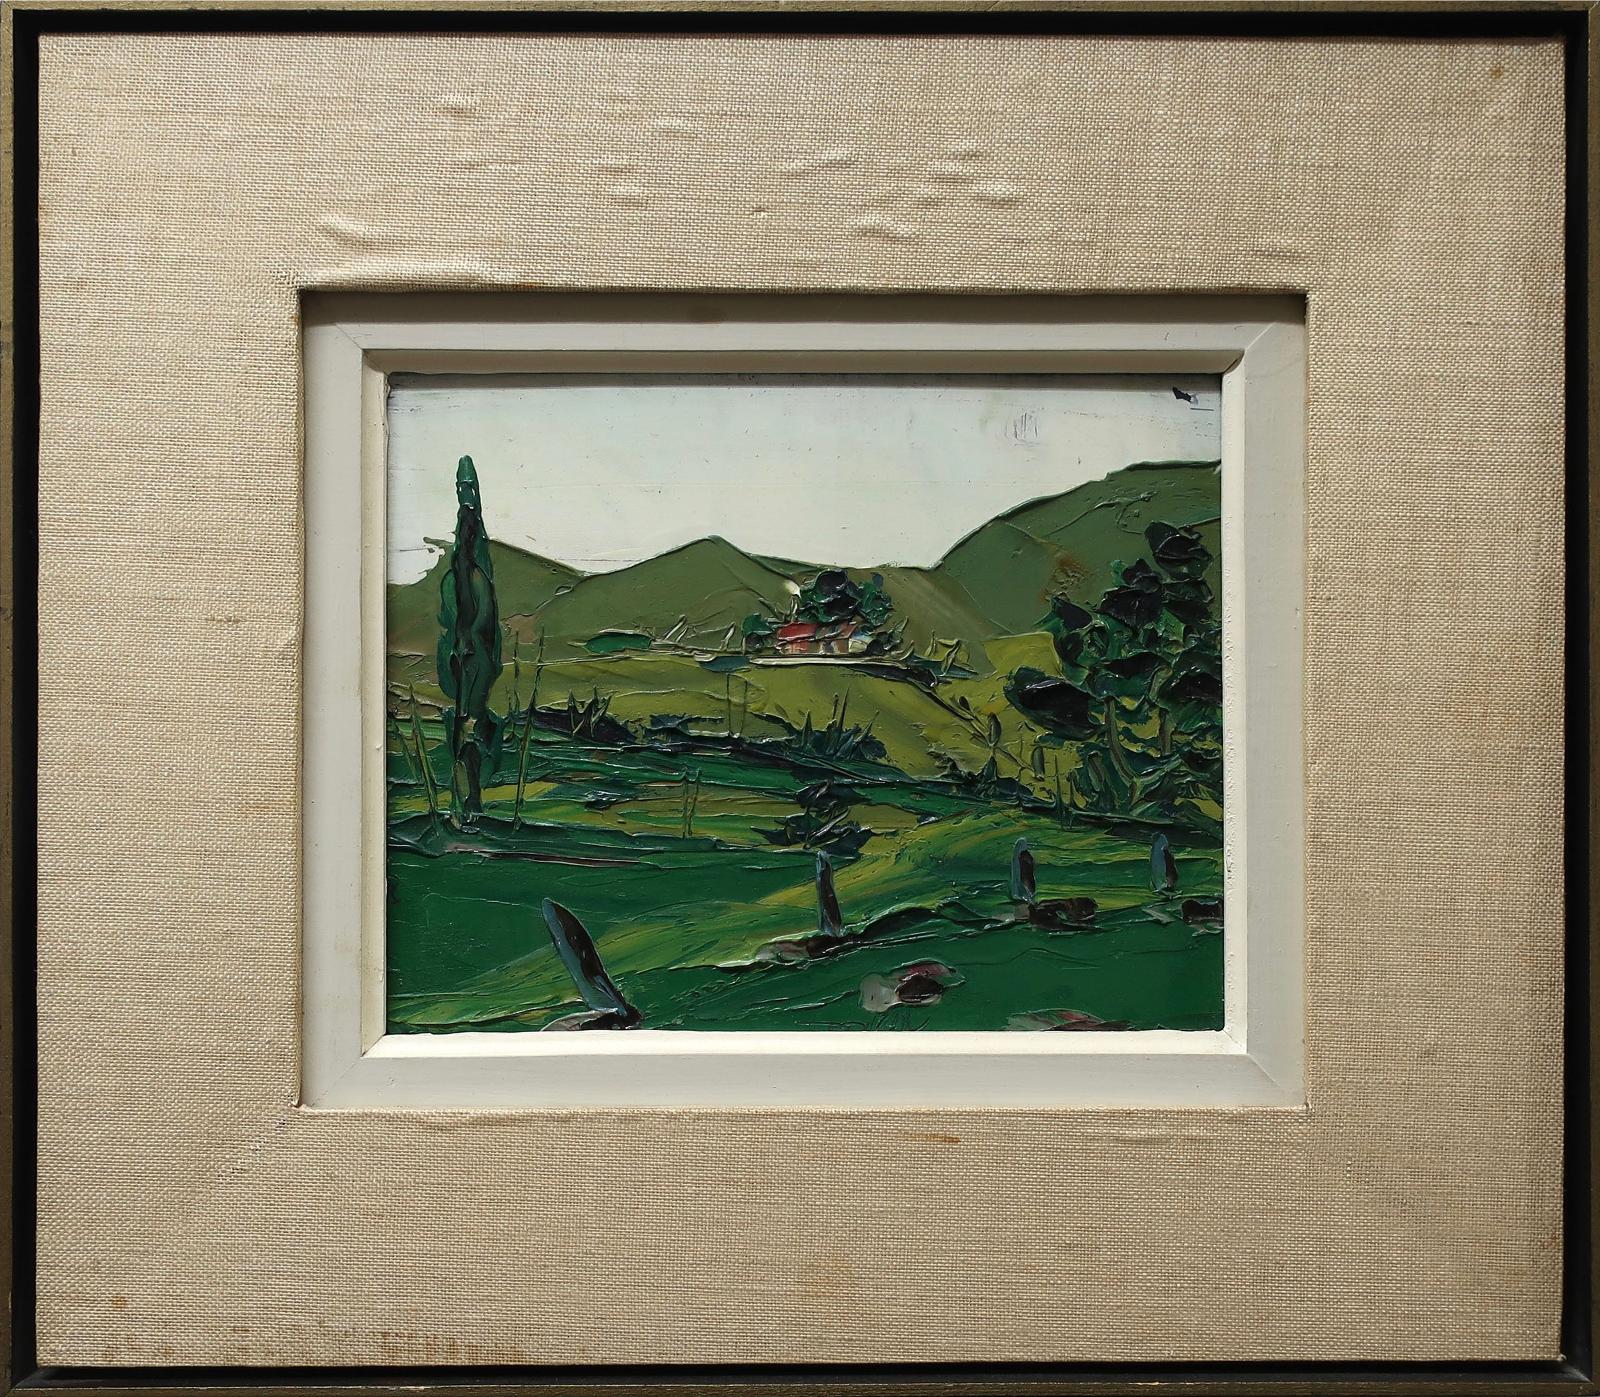 Attila Dovan [d'hoyan] (1927) - Green Landscape With House